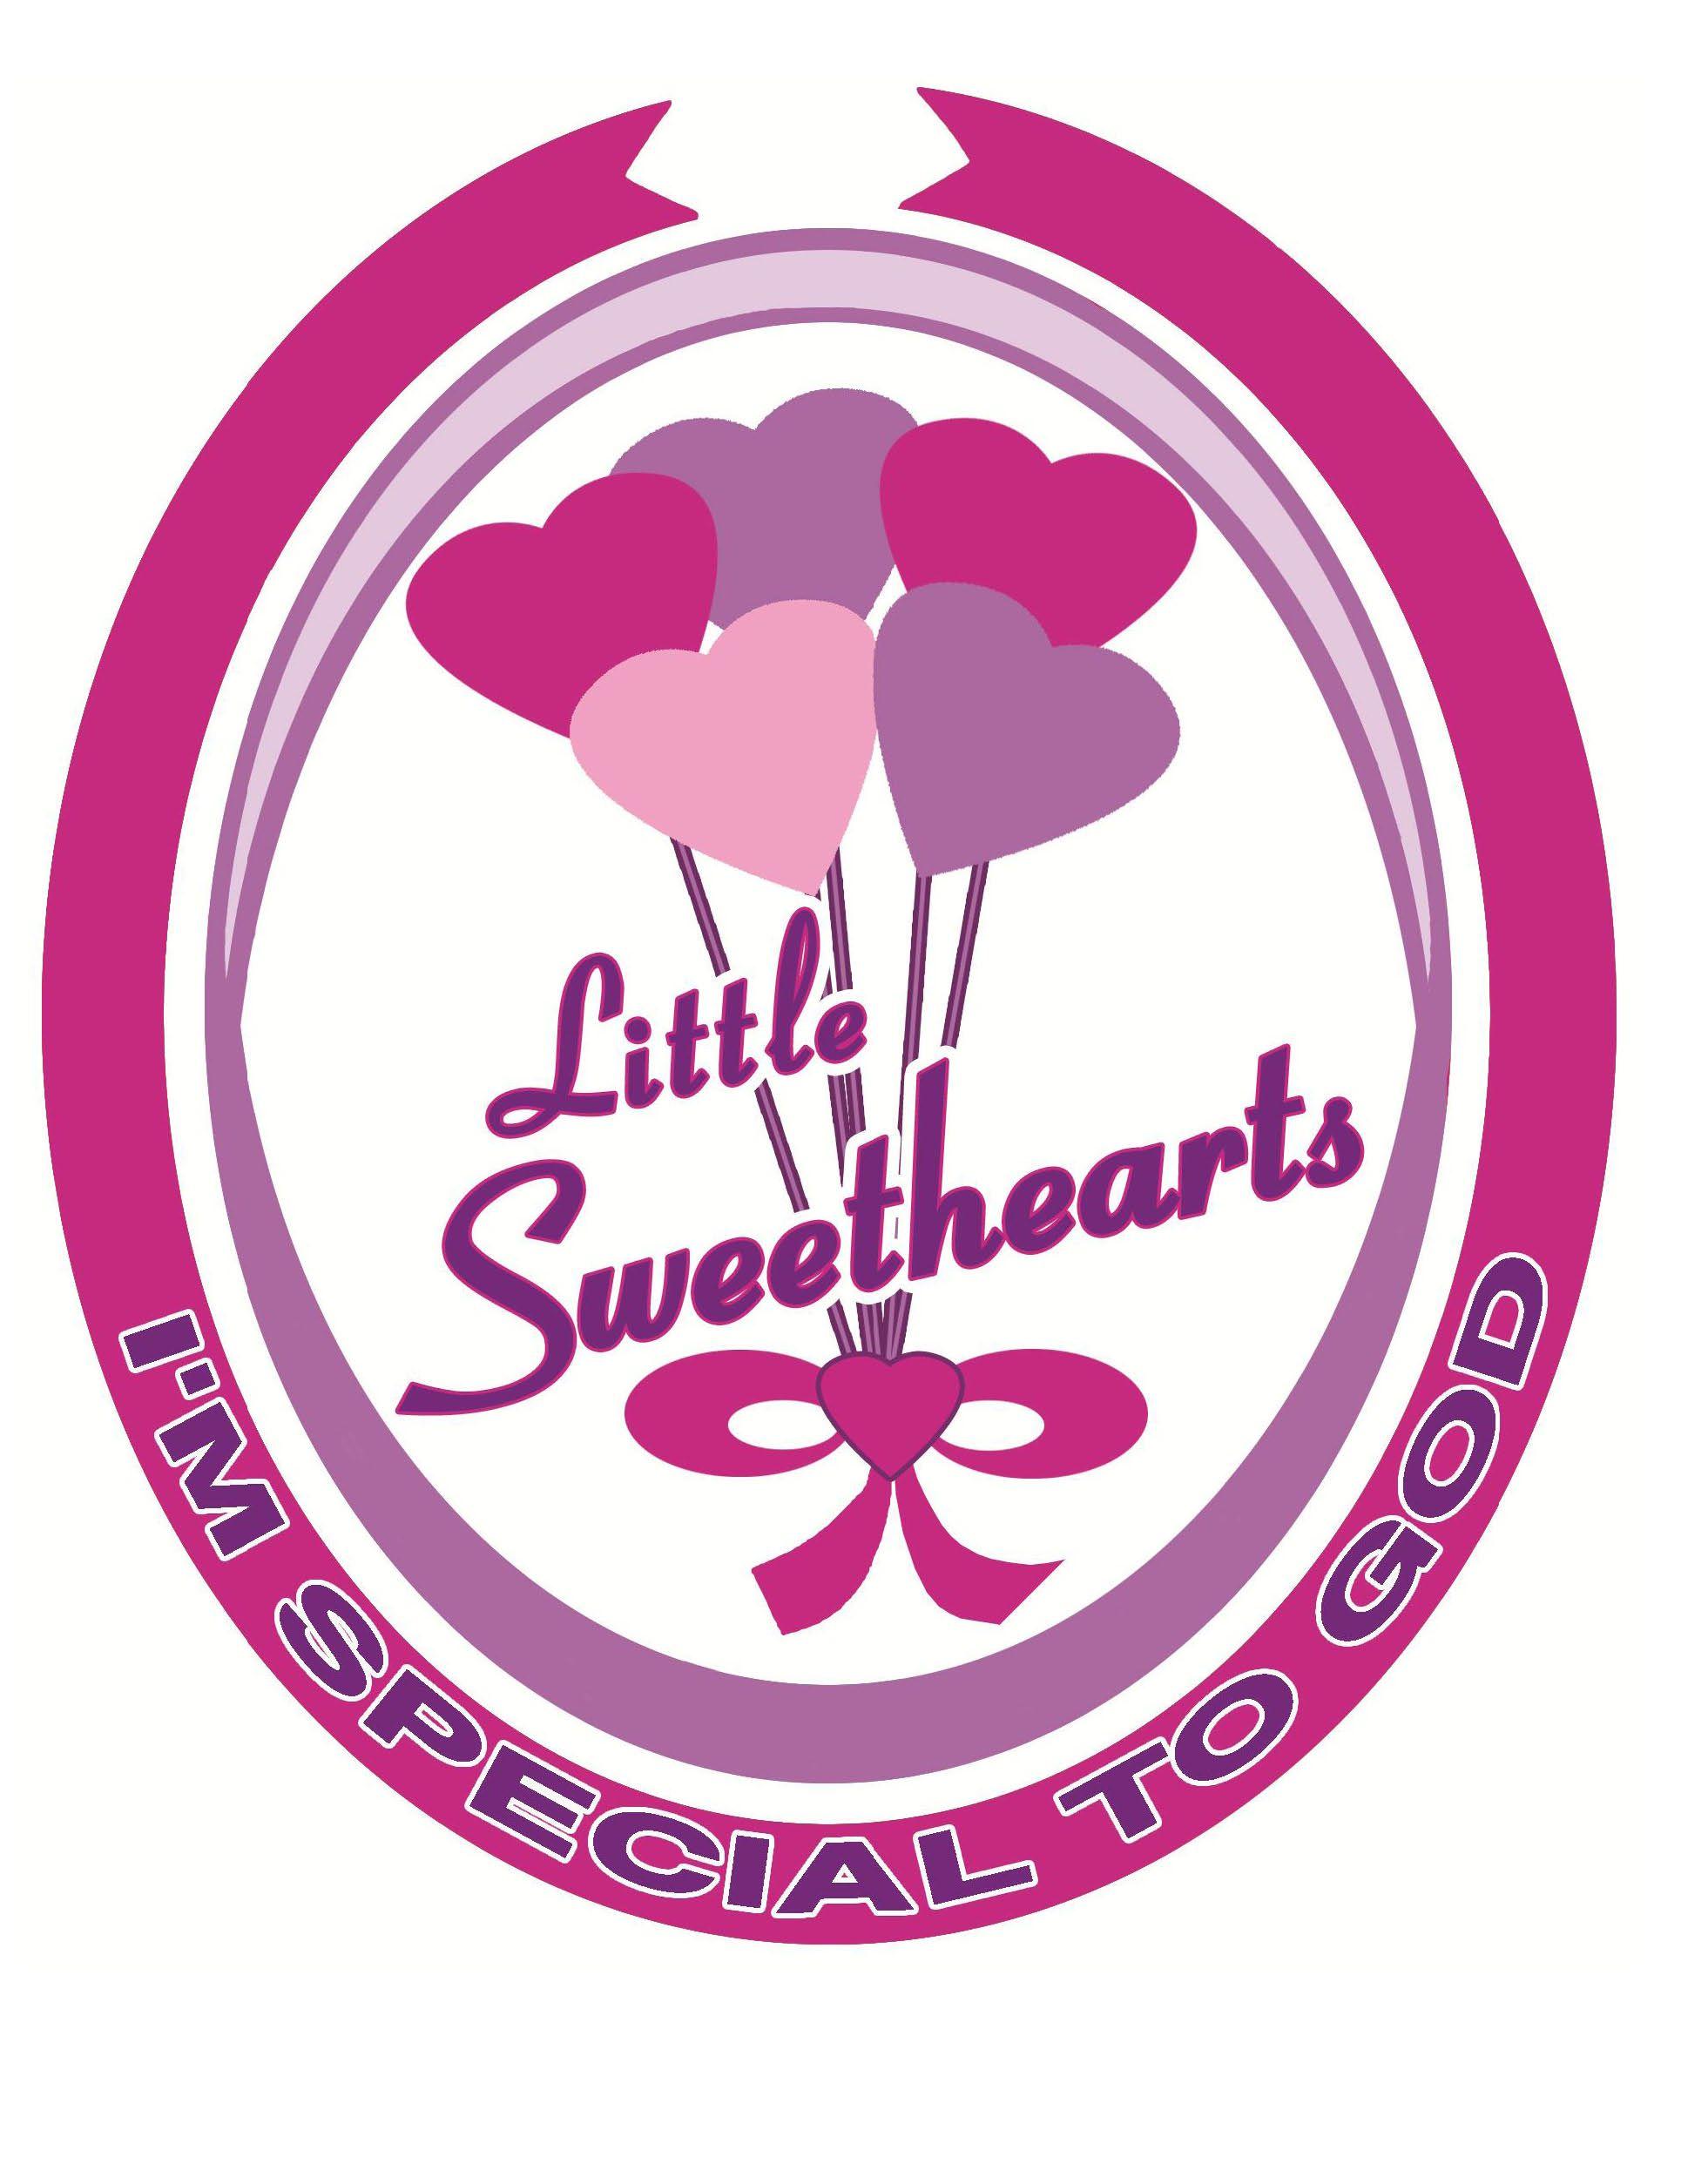 Sweethearts Logo - Little Sweethearts